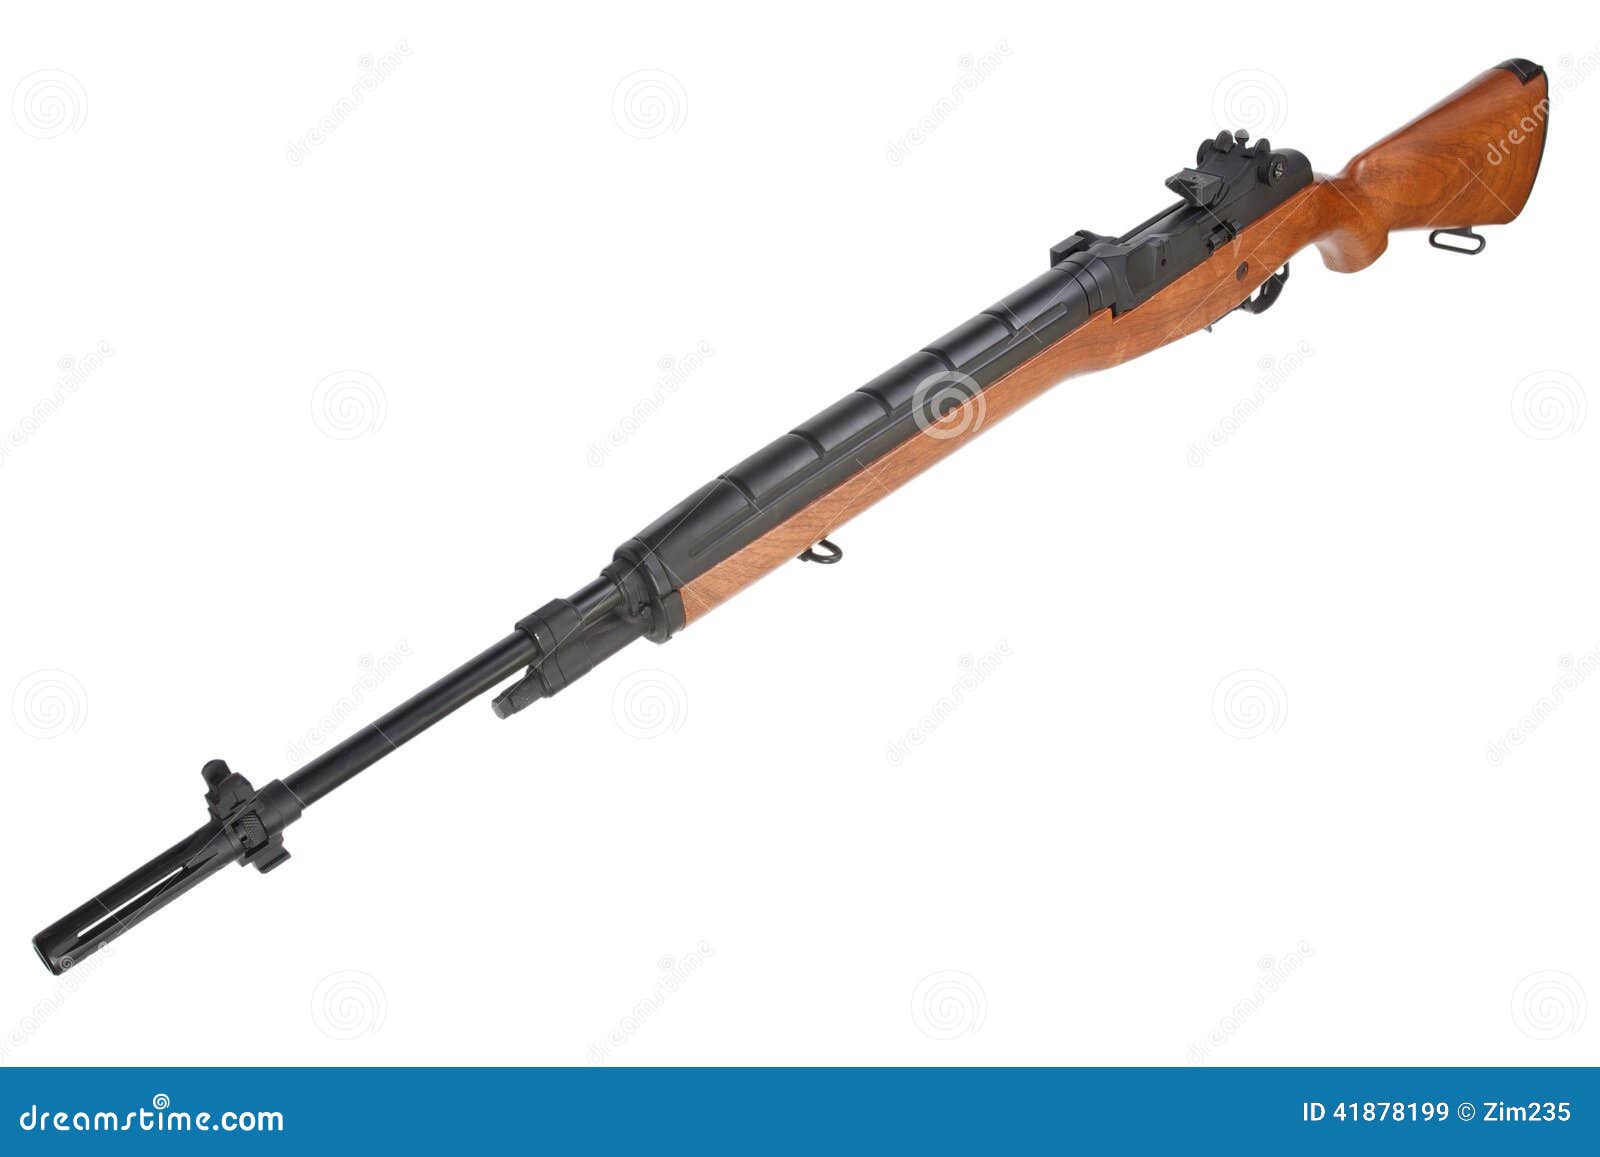 m14 rifle